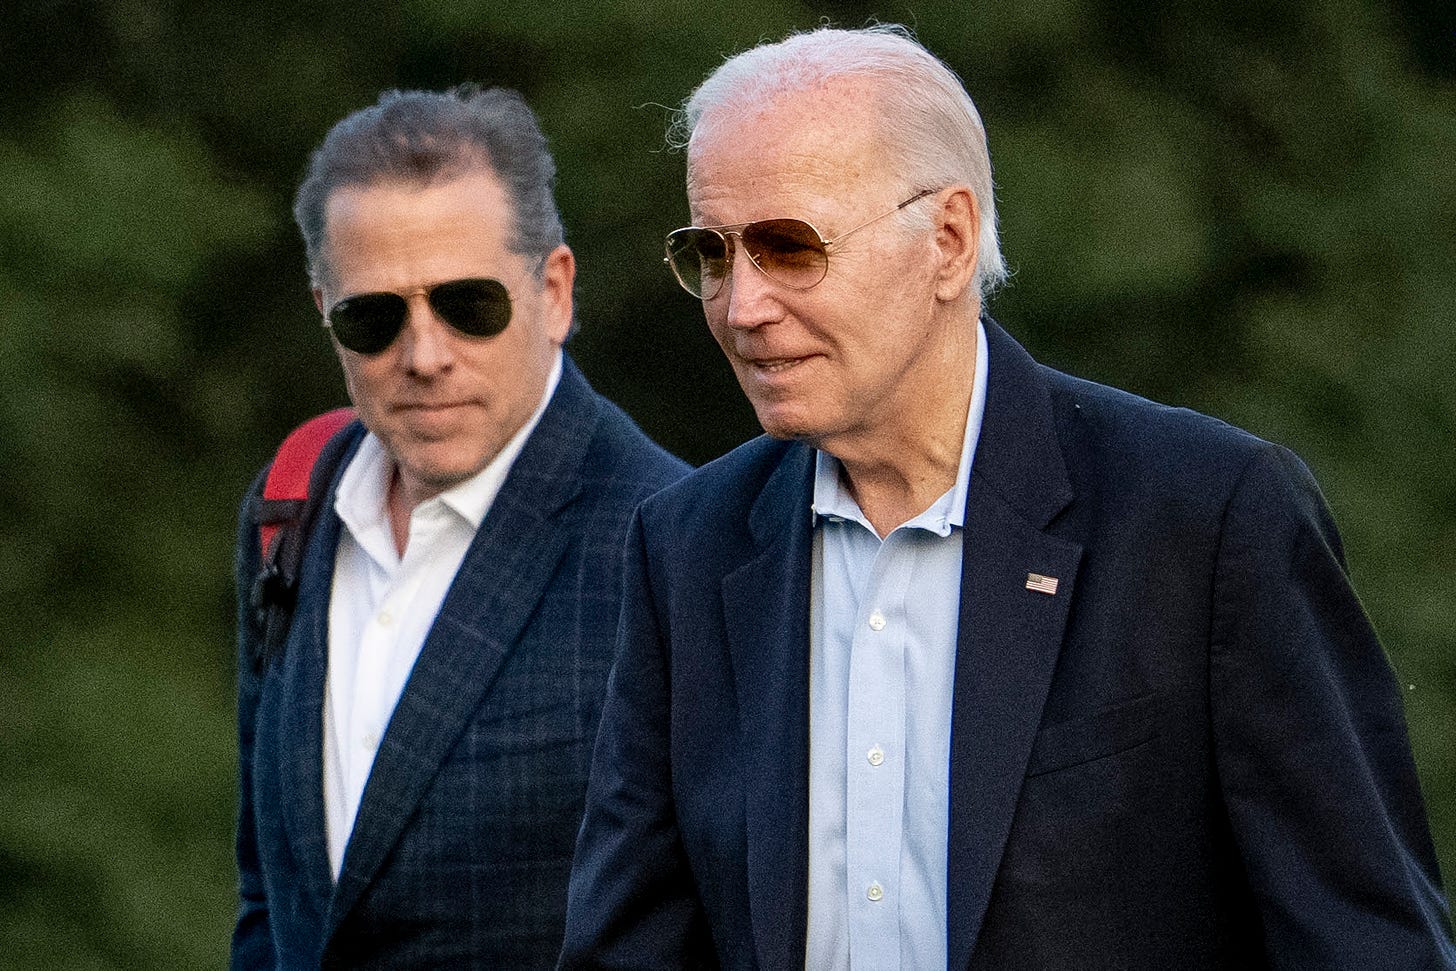 President Joe Biden and Hunter Biden arrive at Fort McNair, Washington.